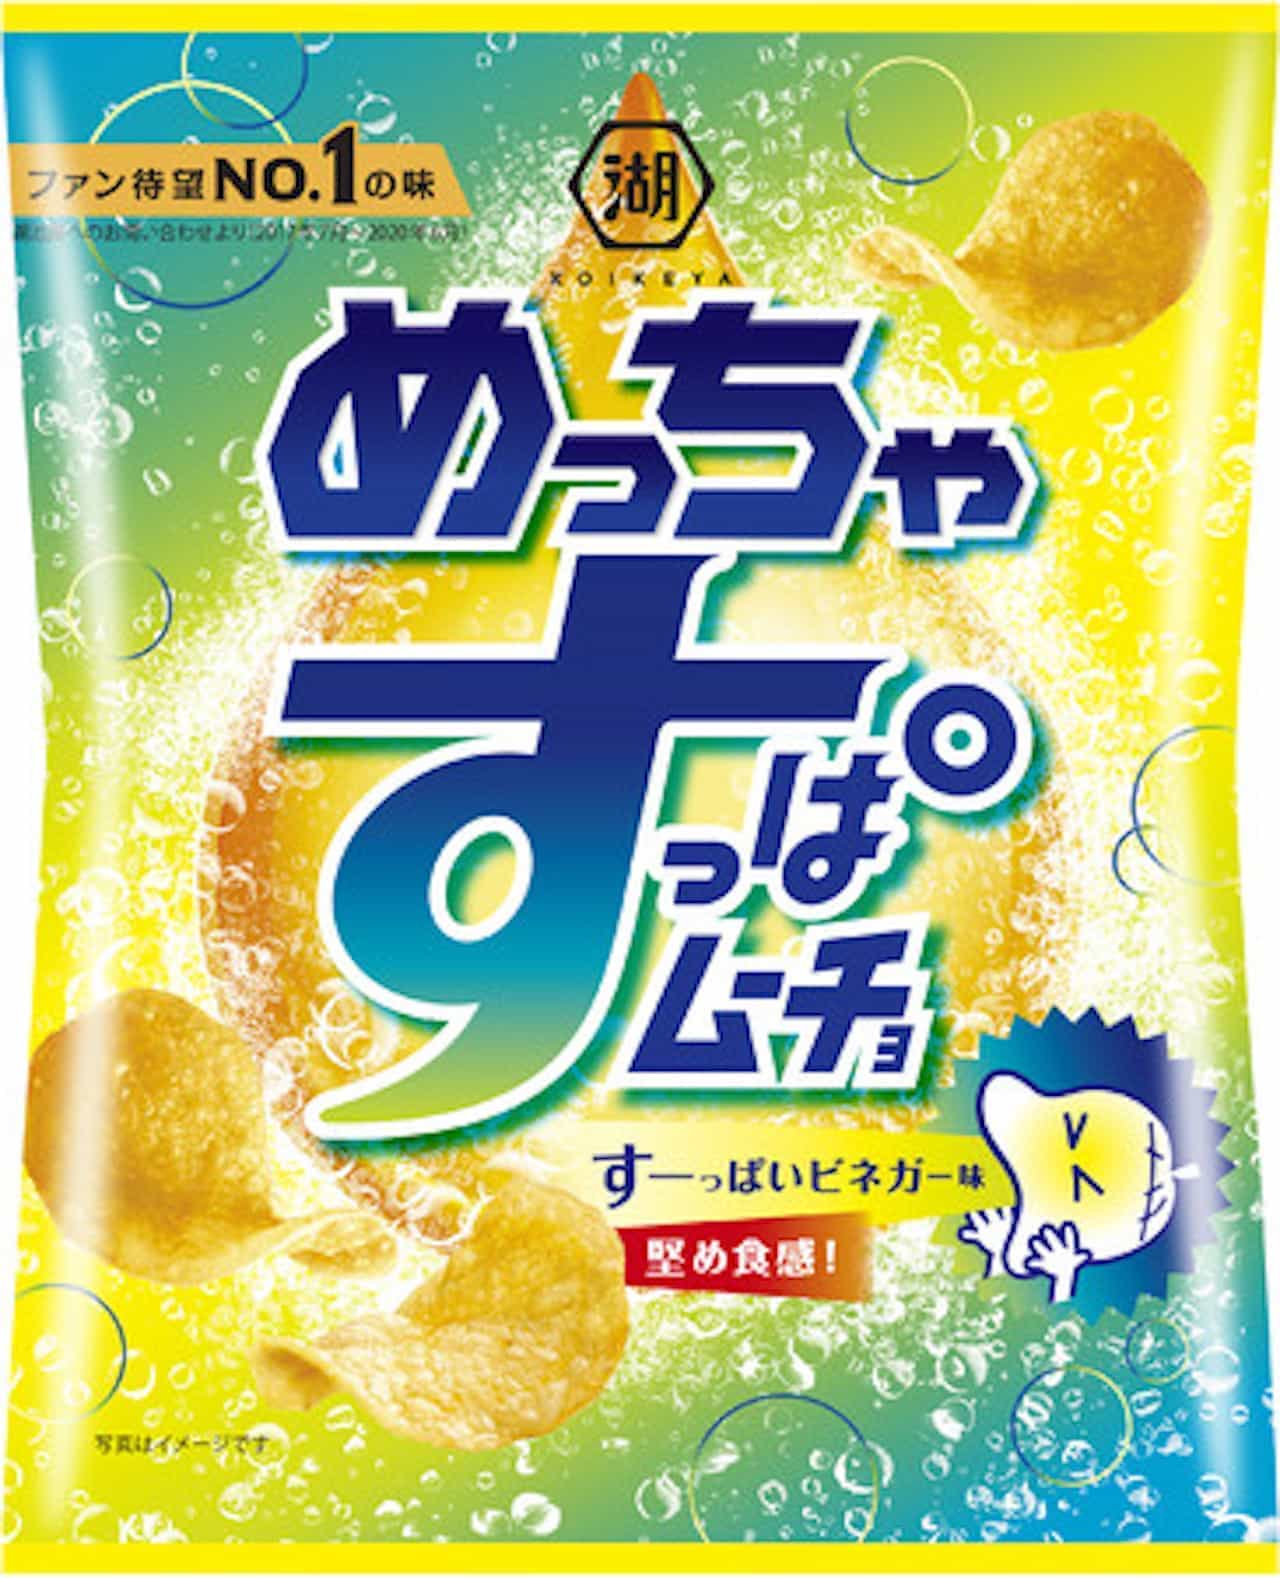 Koike-ya "Much sour snifit sour vinegar flavor"